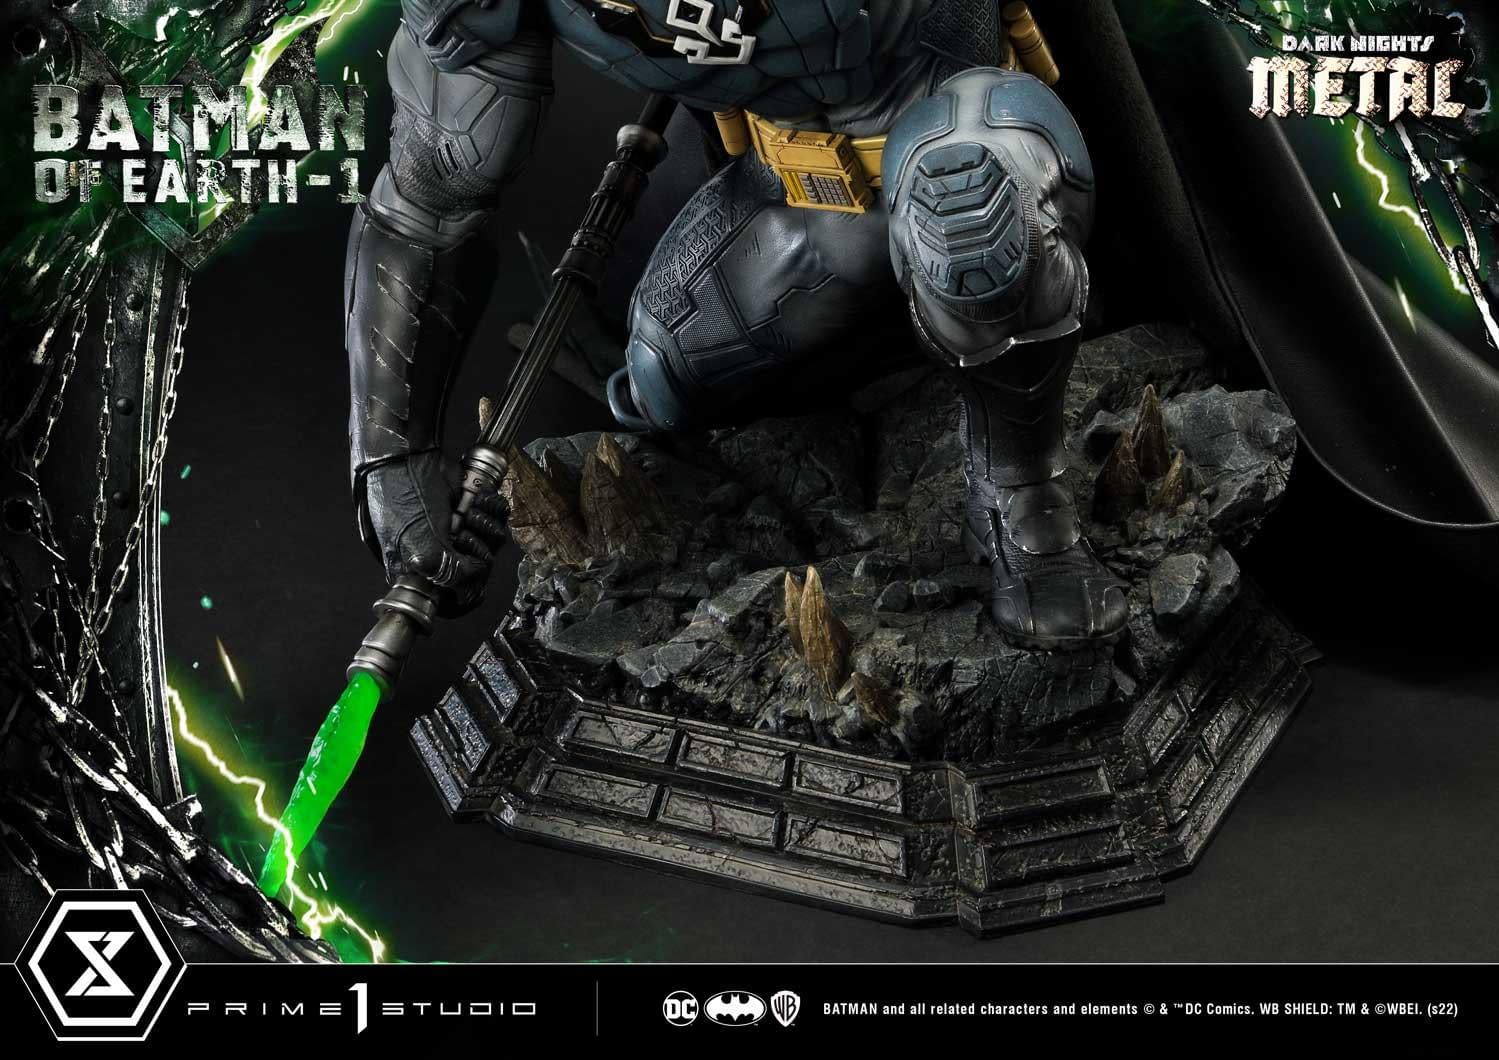 Batman of Earth-1 Embraces the Dark Night with Prime 1 Studio 